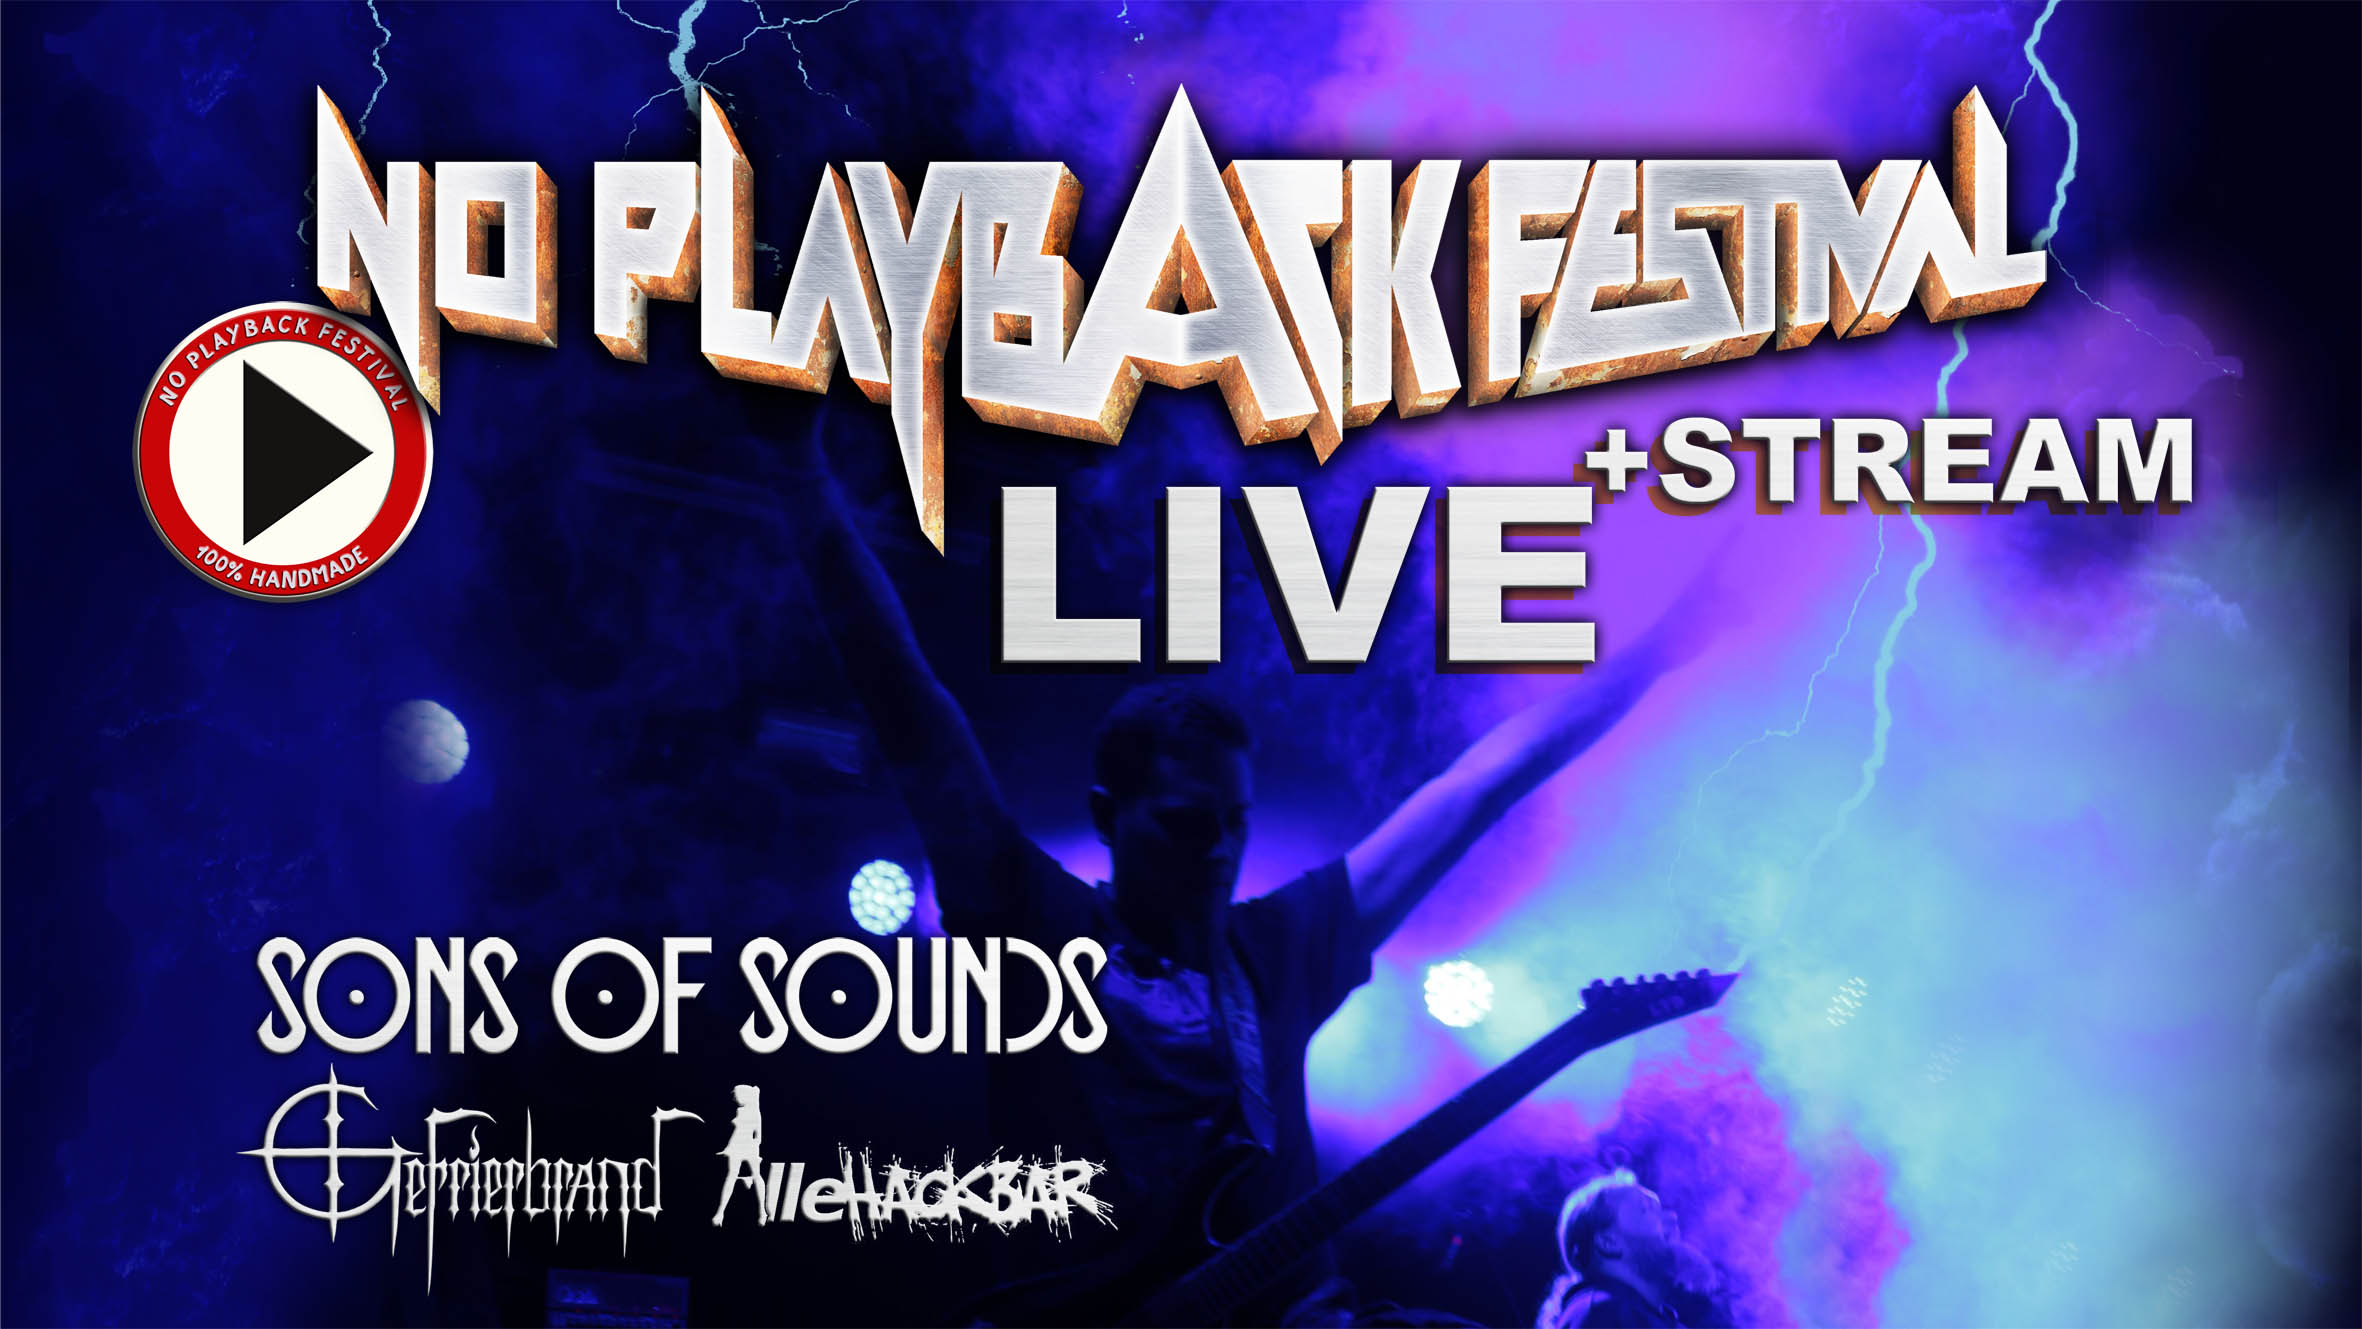 Poster No Playback Festival 2020 Live + Stream